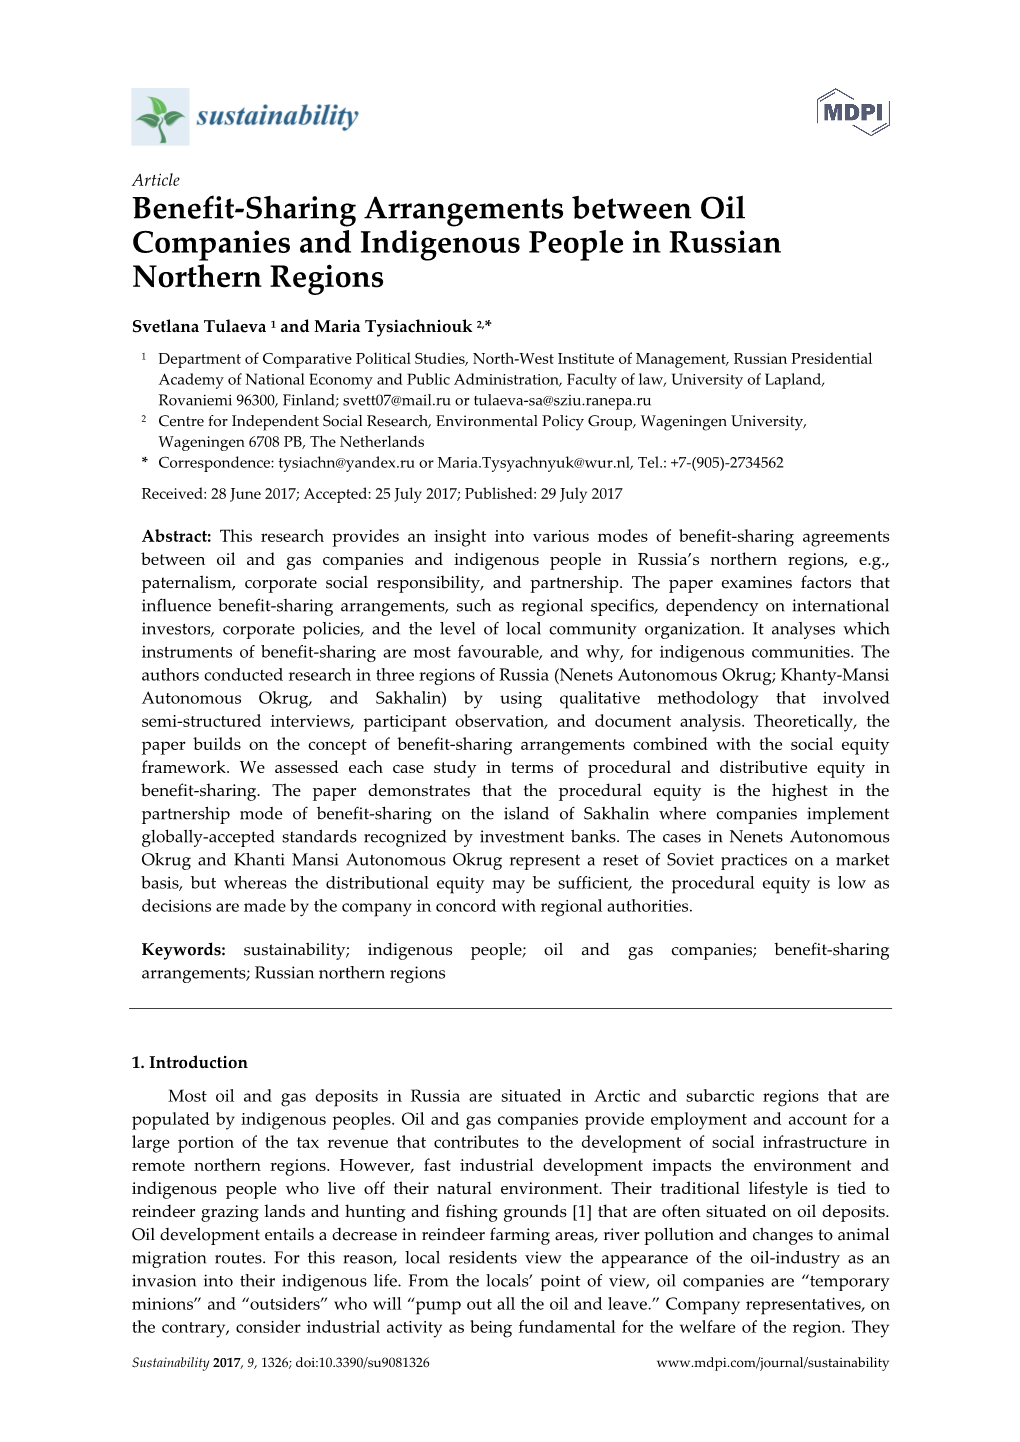 Benefit-Sharing Arrangements Between Oil Companies and Indigenous People in Russian Northern Regions